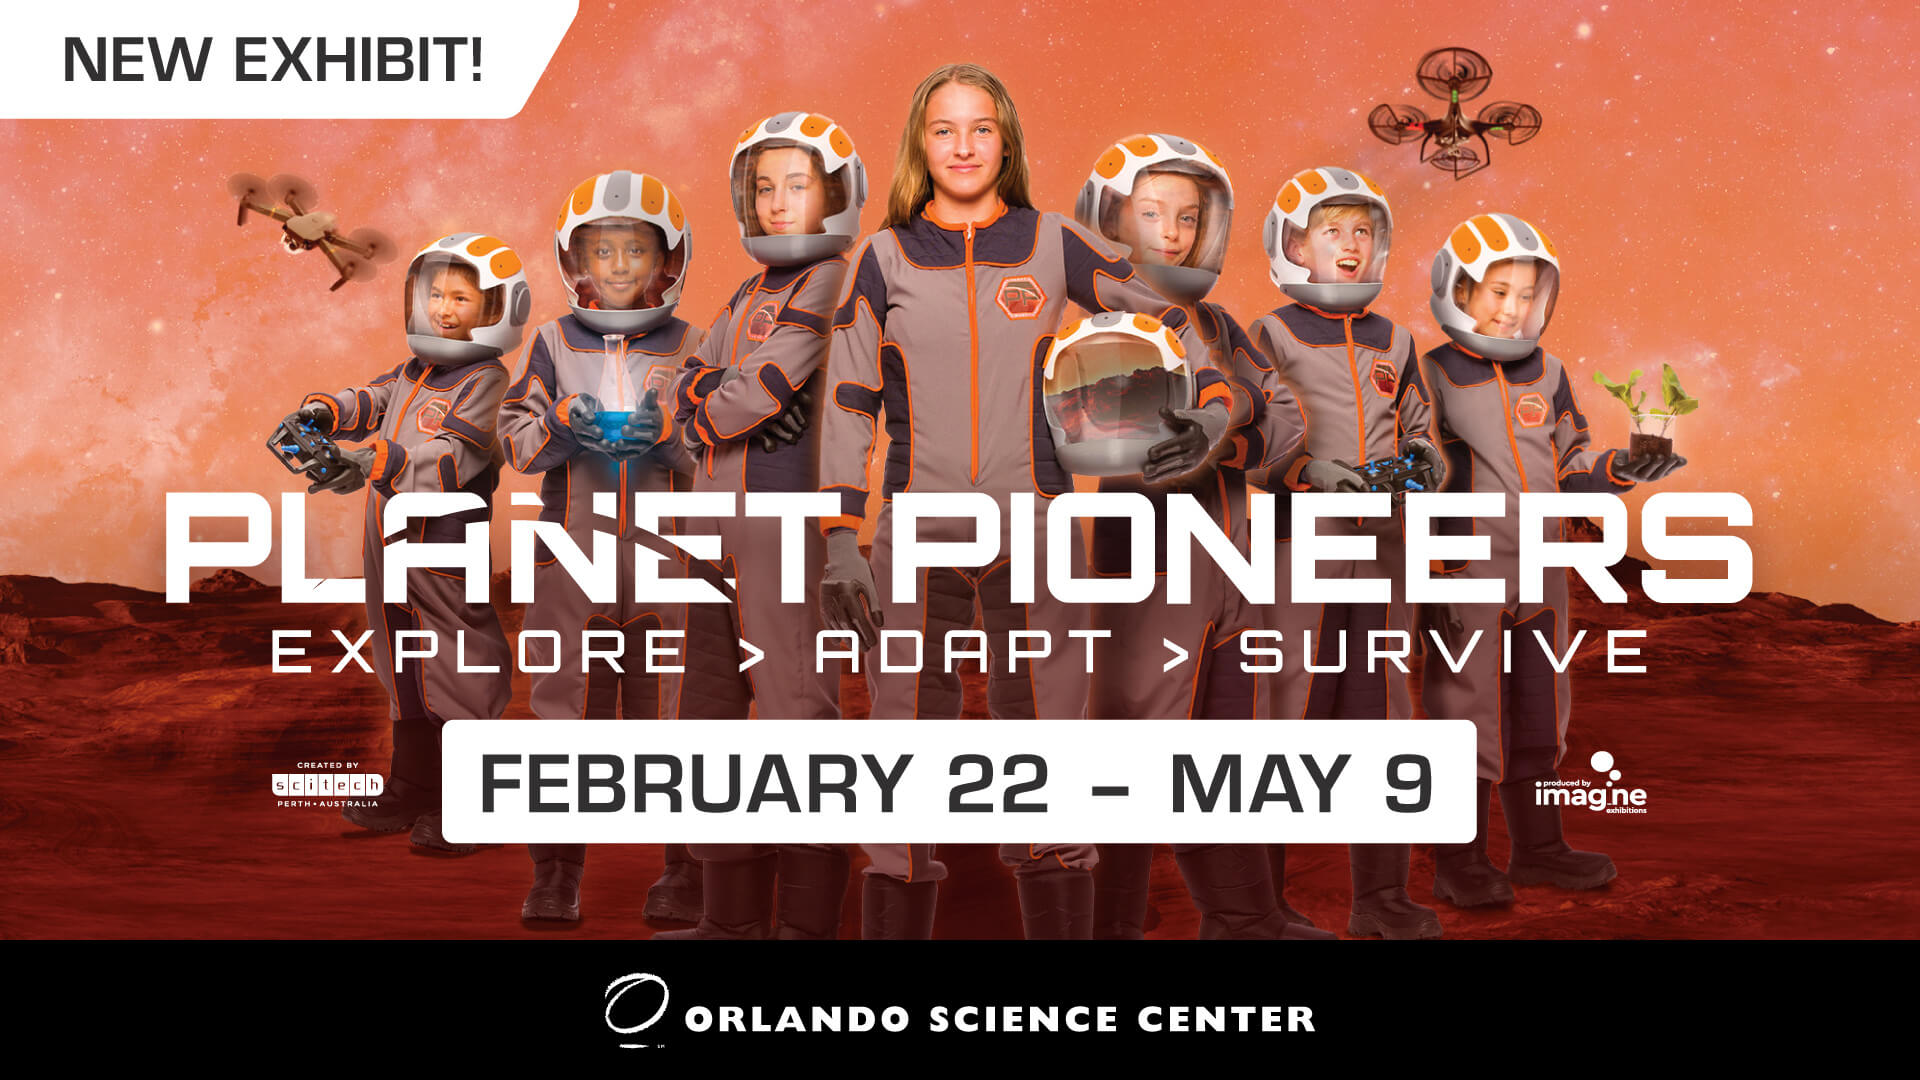 Planet Pioneers Exhibit - Explore > Adapt > Survive